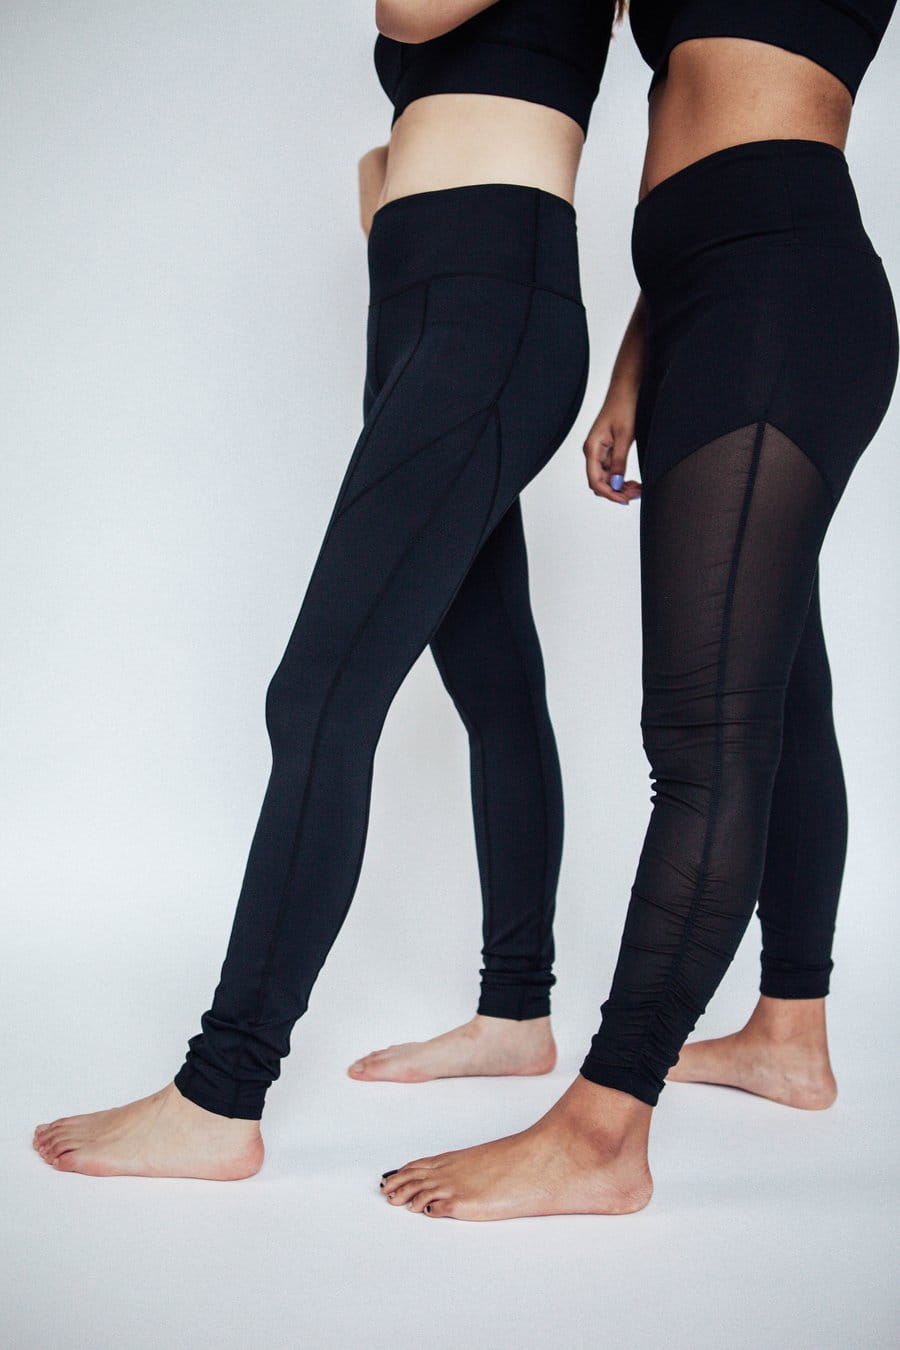  LEINIDINA Cutout High Waisted Yoga Pants with Pockets